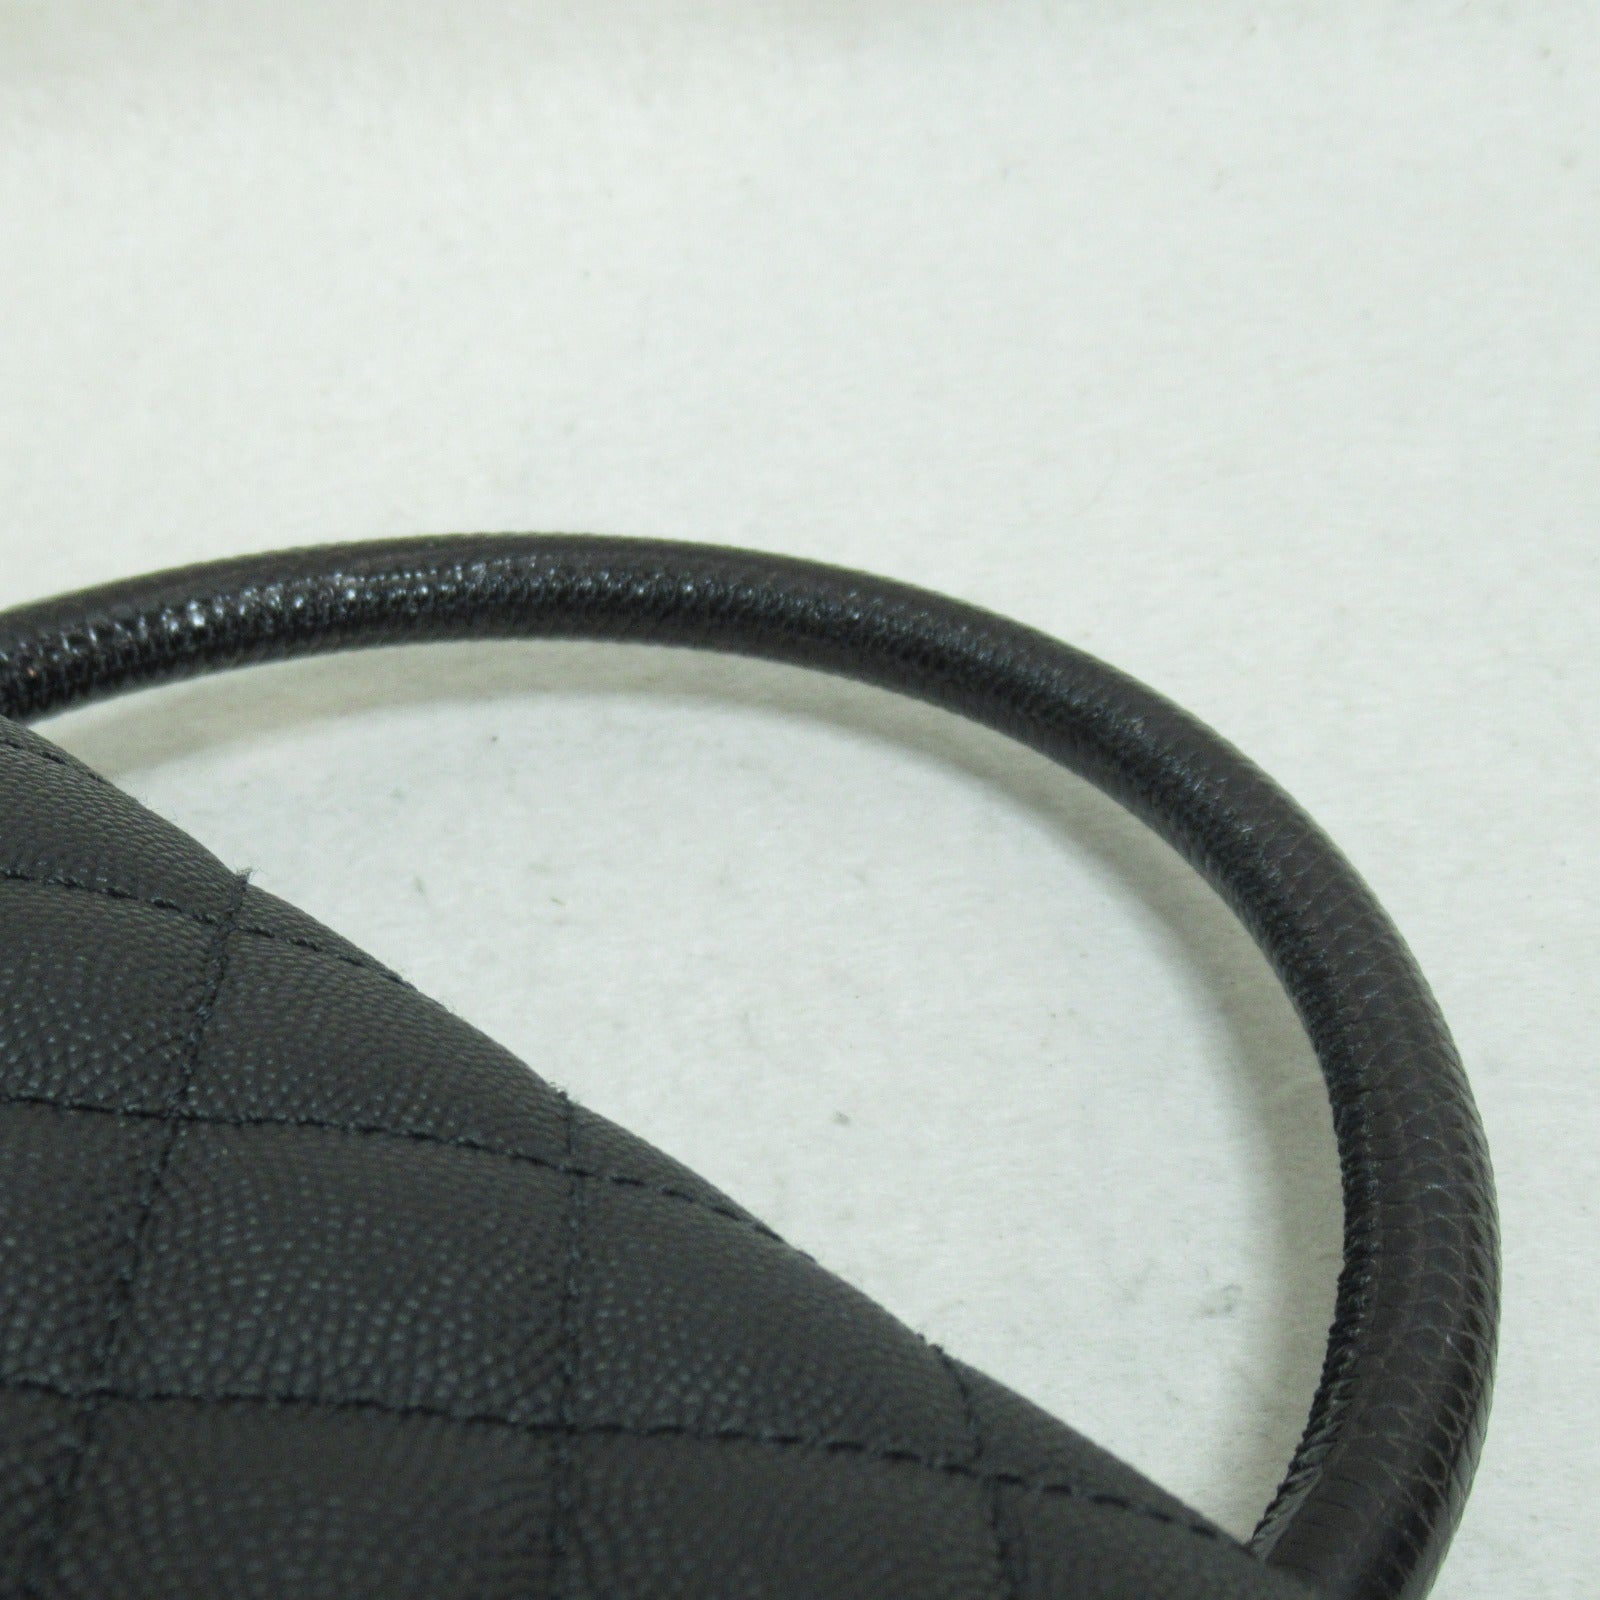 Chanel Coco Handler 2w Shoulder Bag 2w Shoulder Bag Caviar S  Black A92991